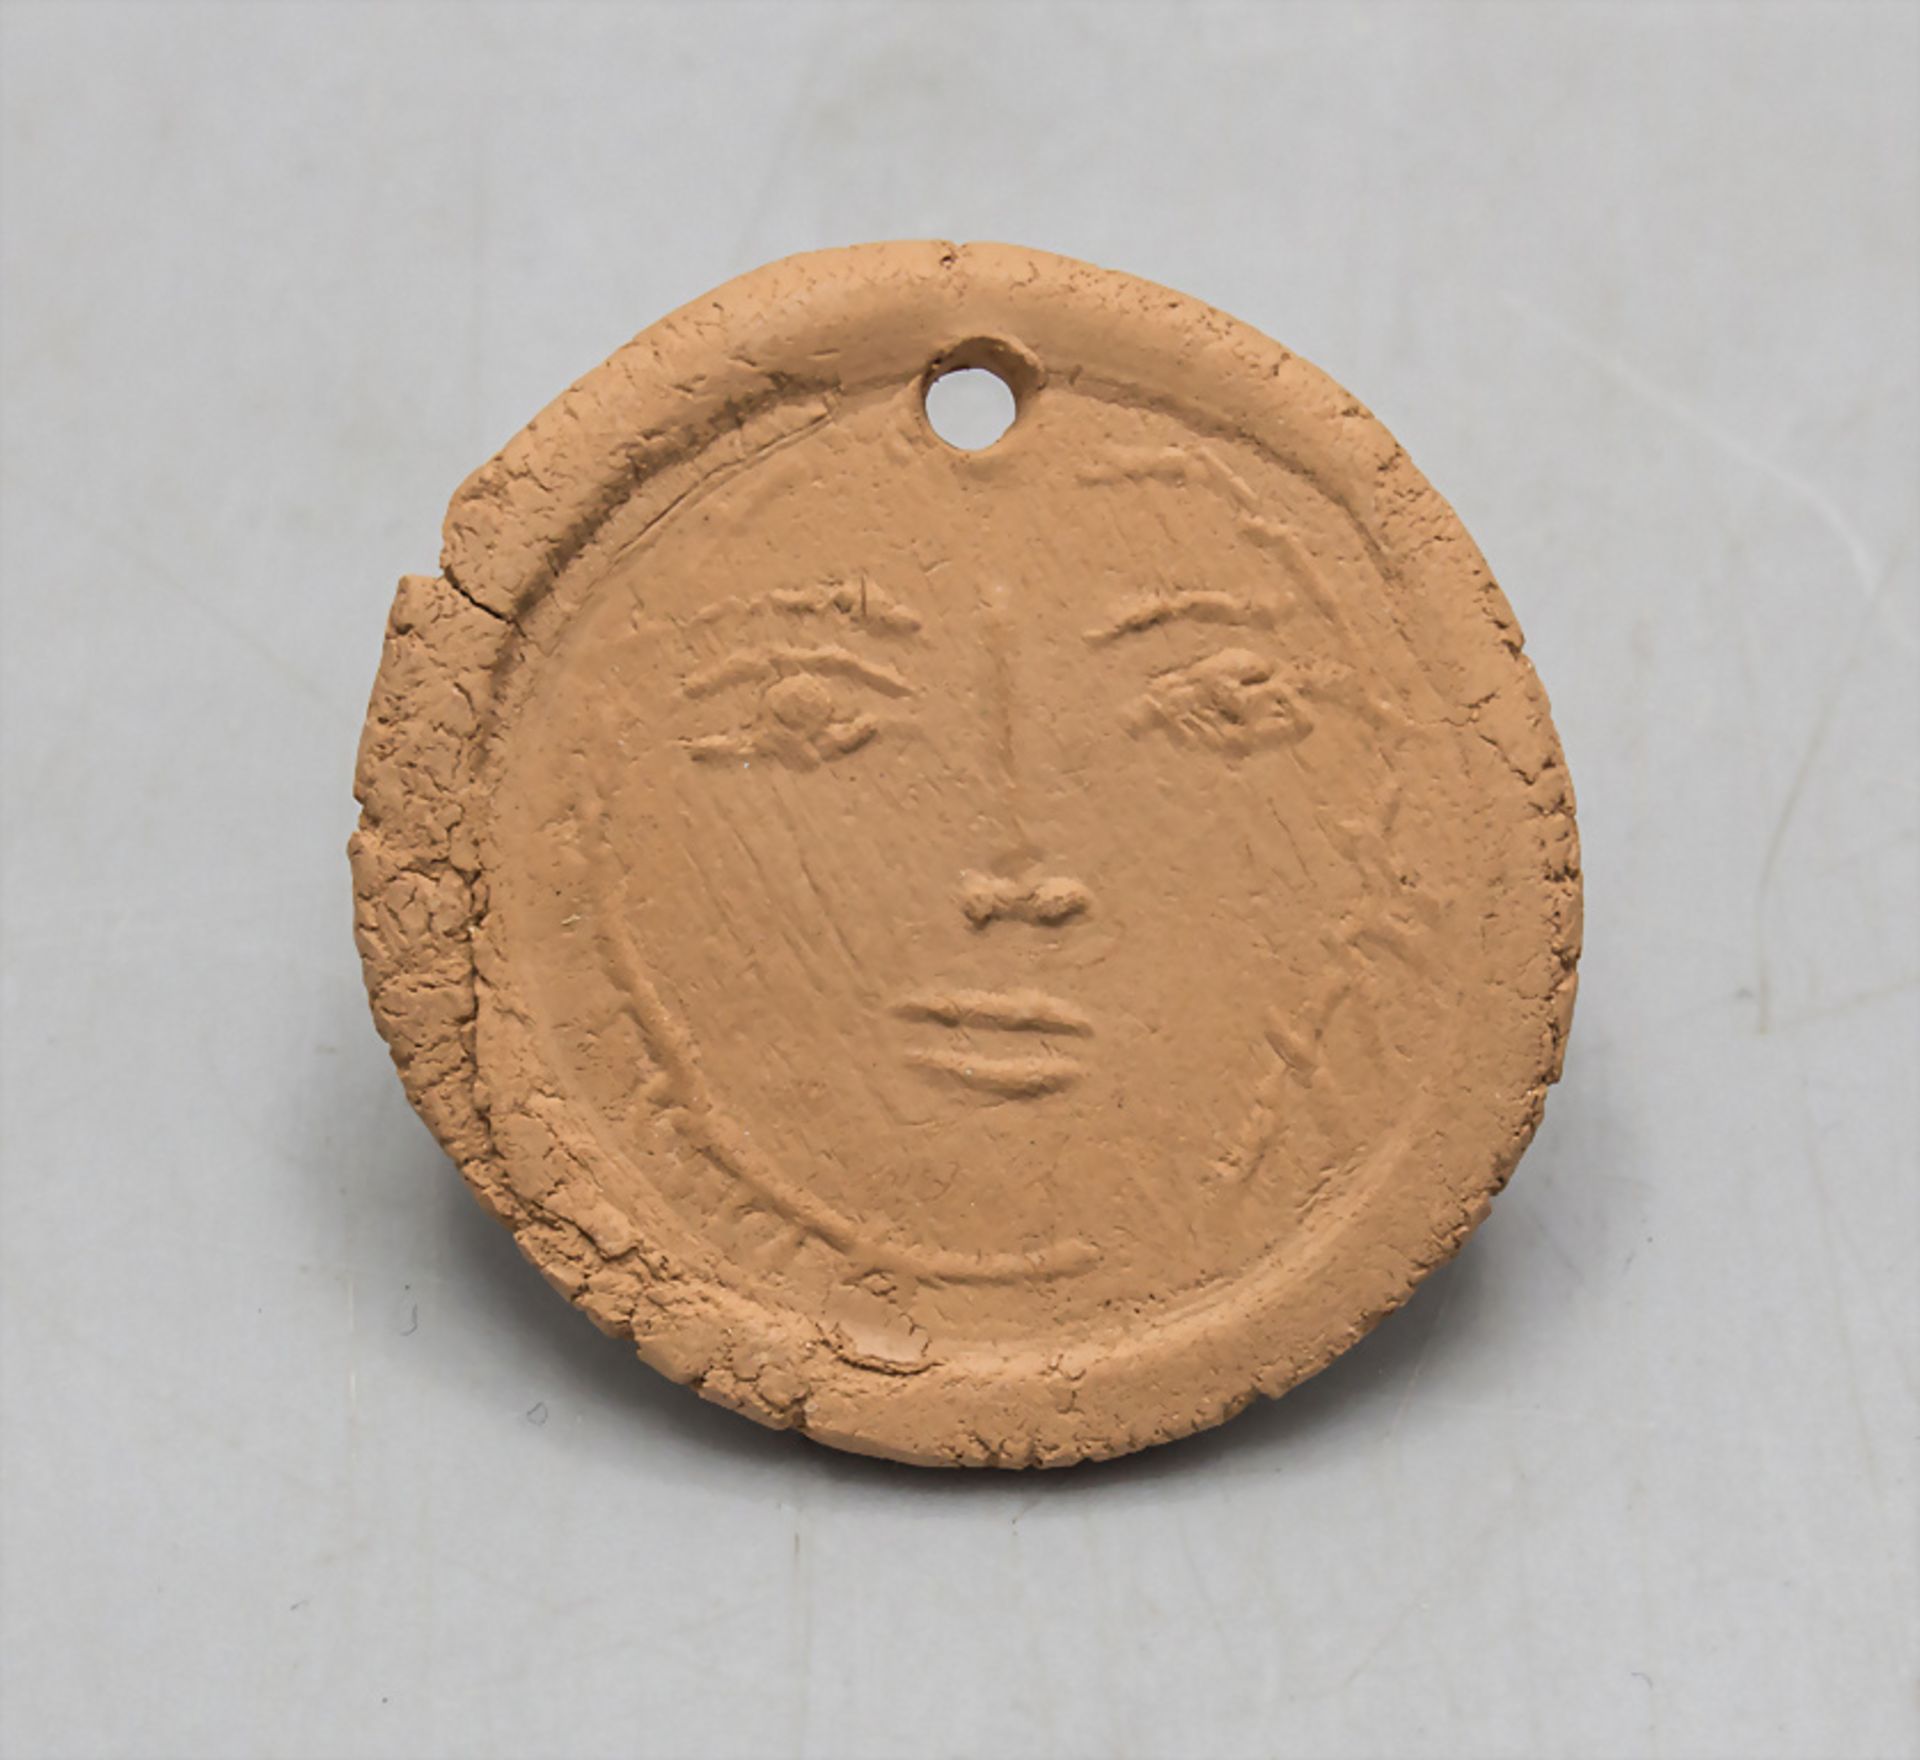 Pablo PICASSO (1881-1973), Keramikplakette 'Visage de femme' / A ceramic plaque 'Face of a ...